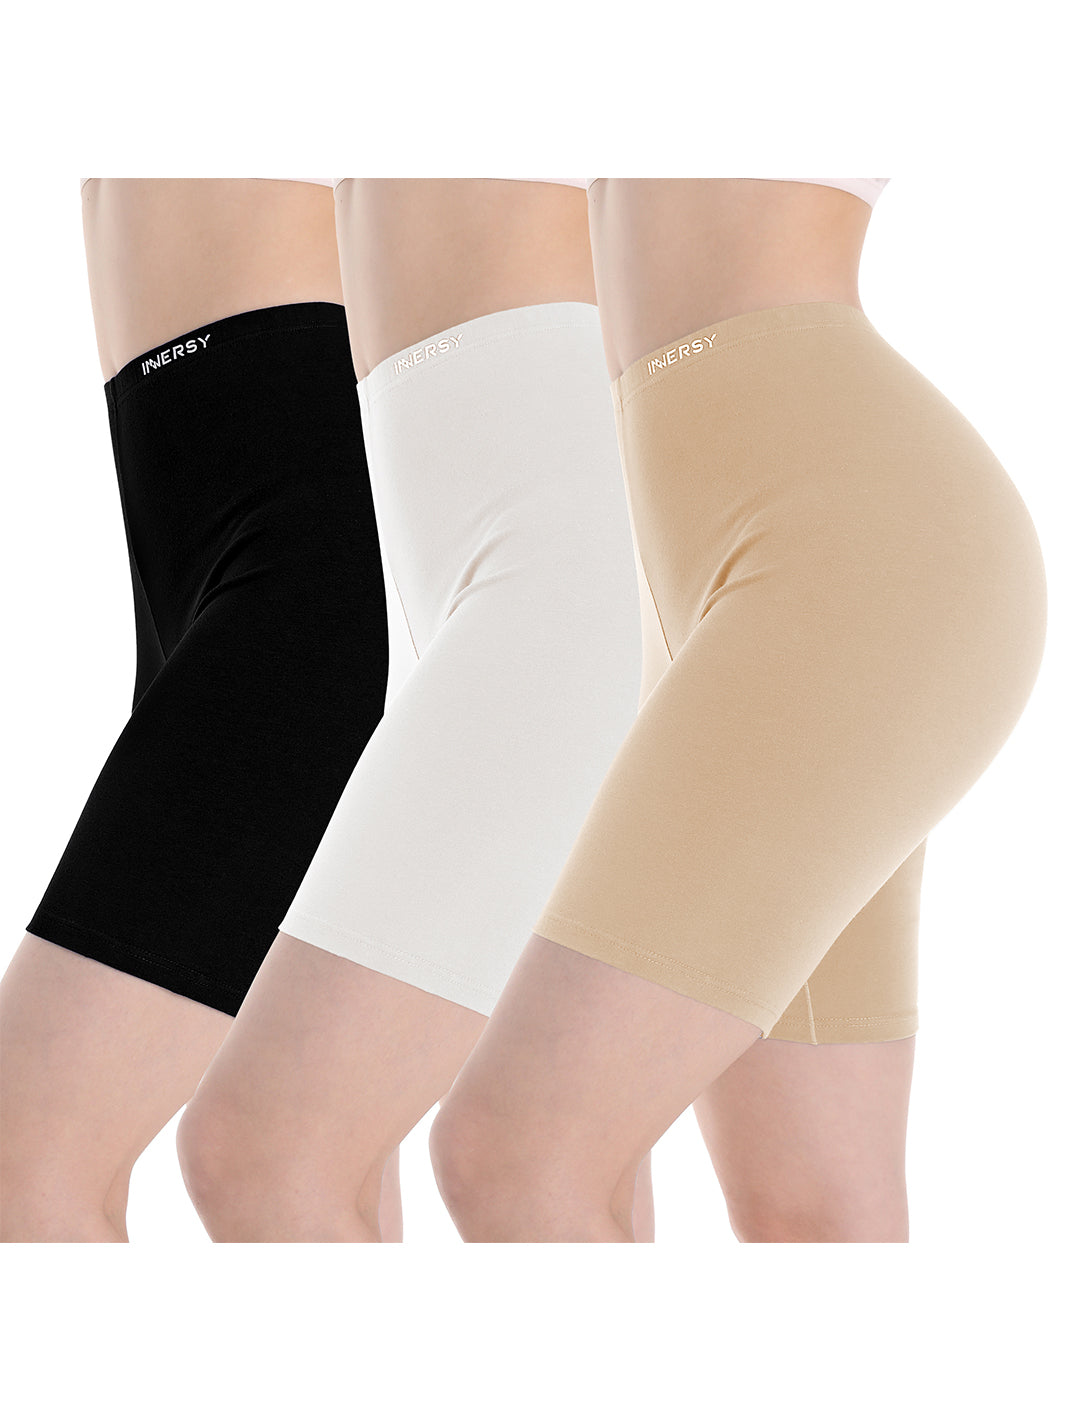 Nicsy Women's Girls Shapewear Slip Shorts Under Dresses for Women Seamless  Sports Underskirts Mid Thigh Boyshorts